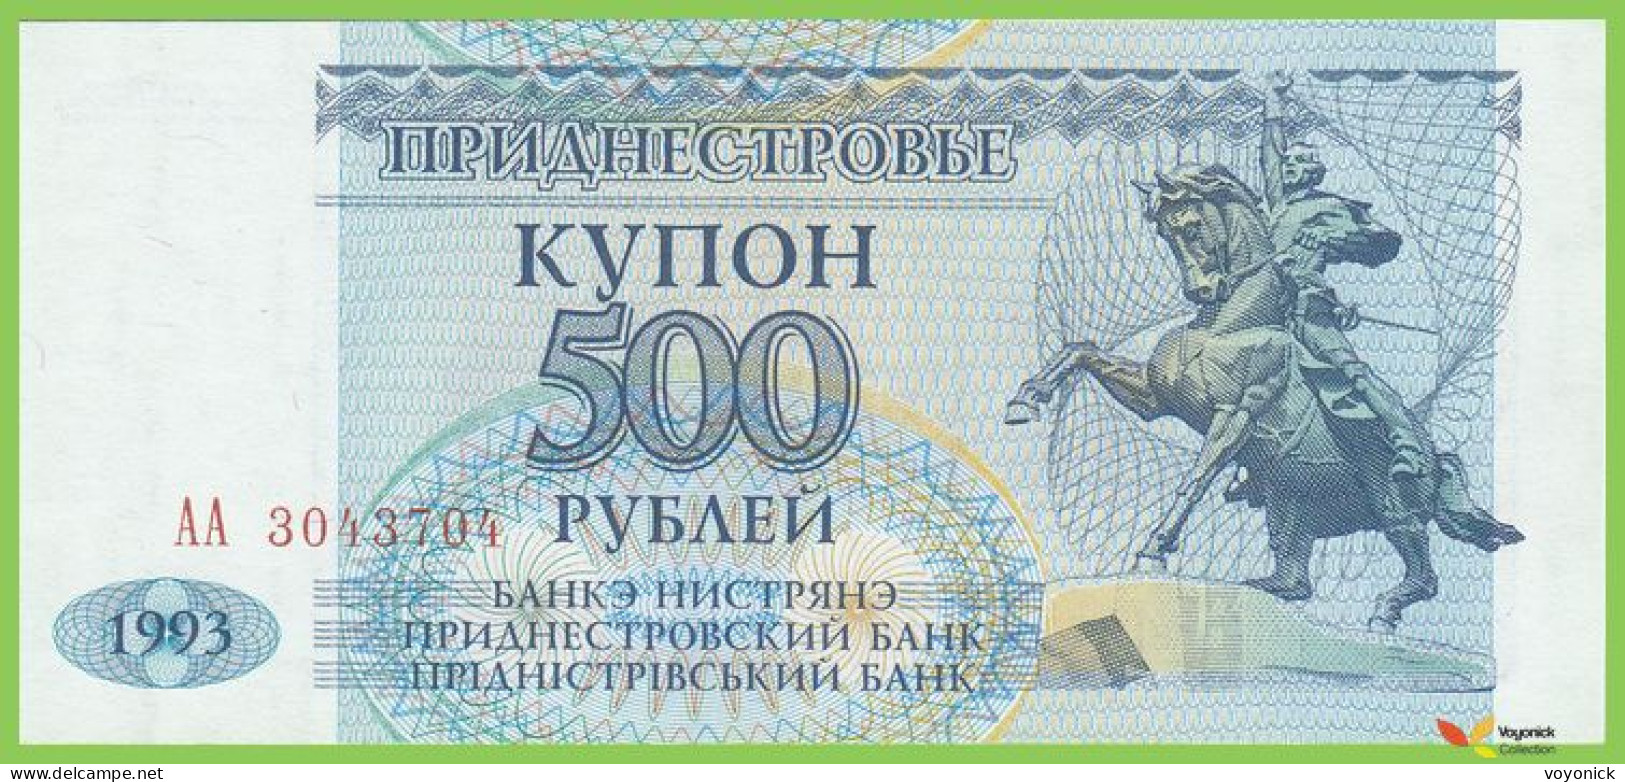 Voyo MOLDOVA (Transdniester) 500 Rubley 1993(1994) P22 B124a АA UNC - Moldavia